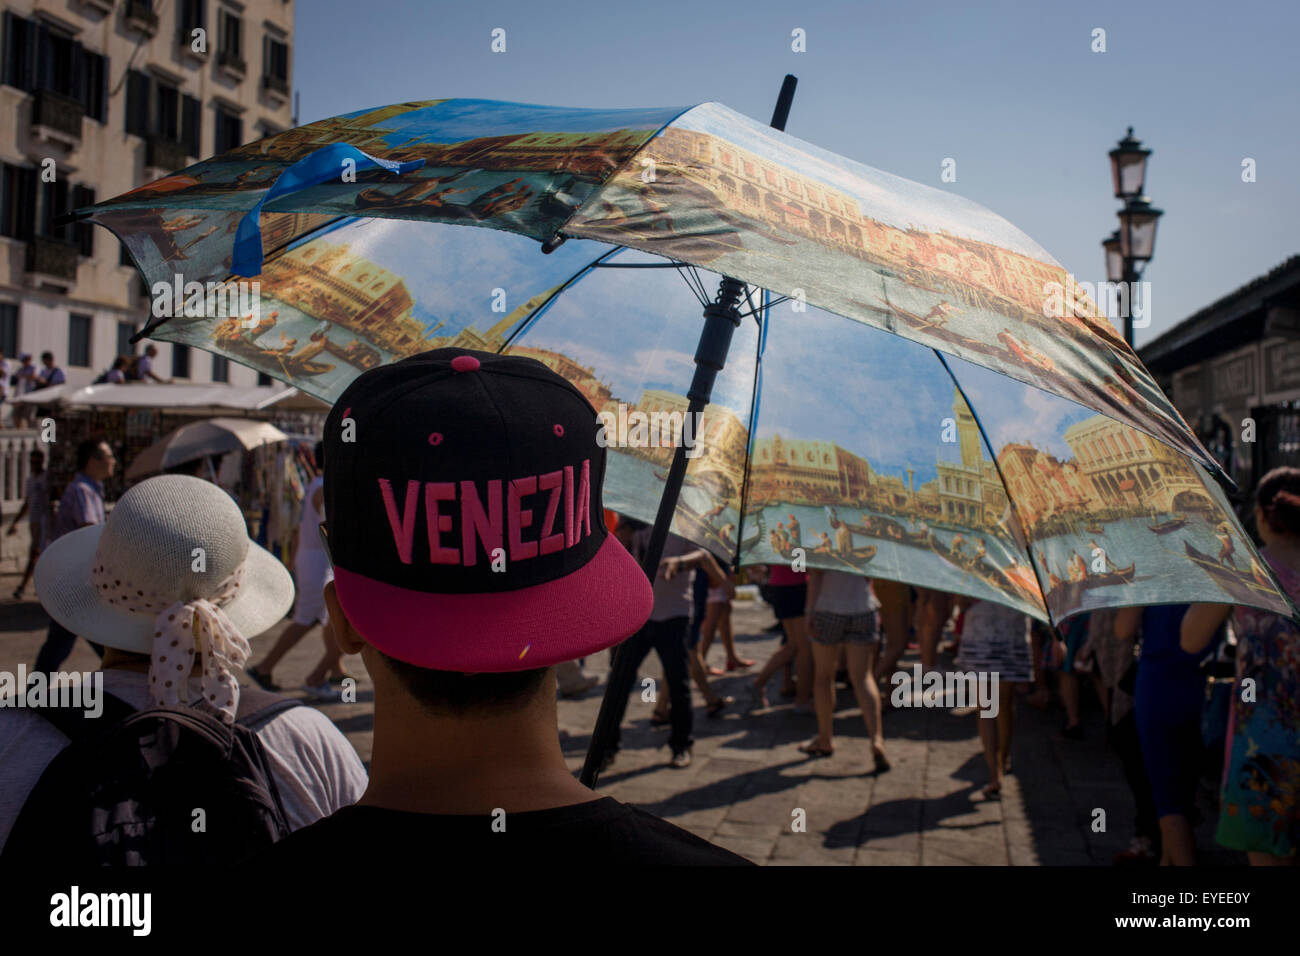 Venezia umbrella hi-res stock photography and images - Alamy